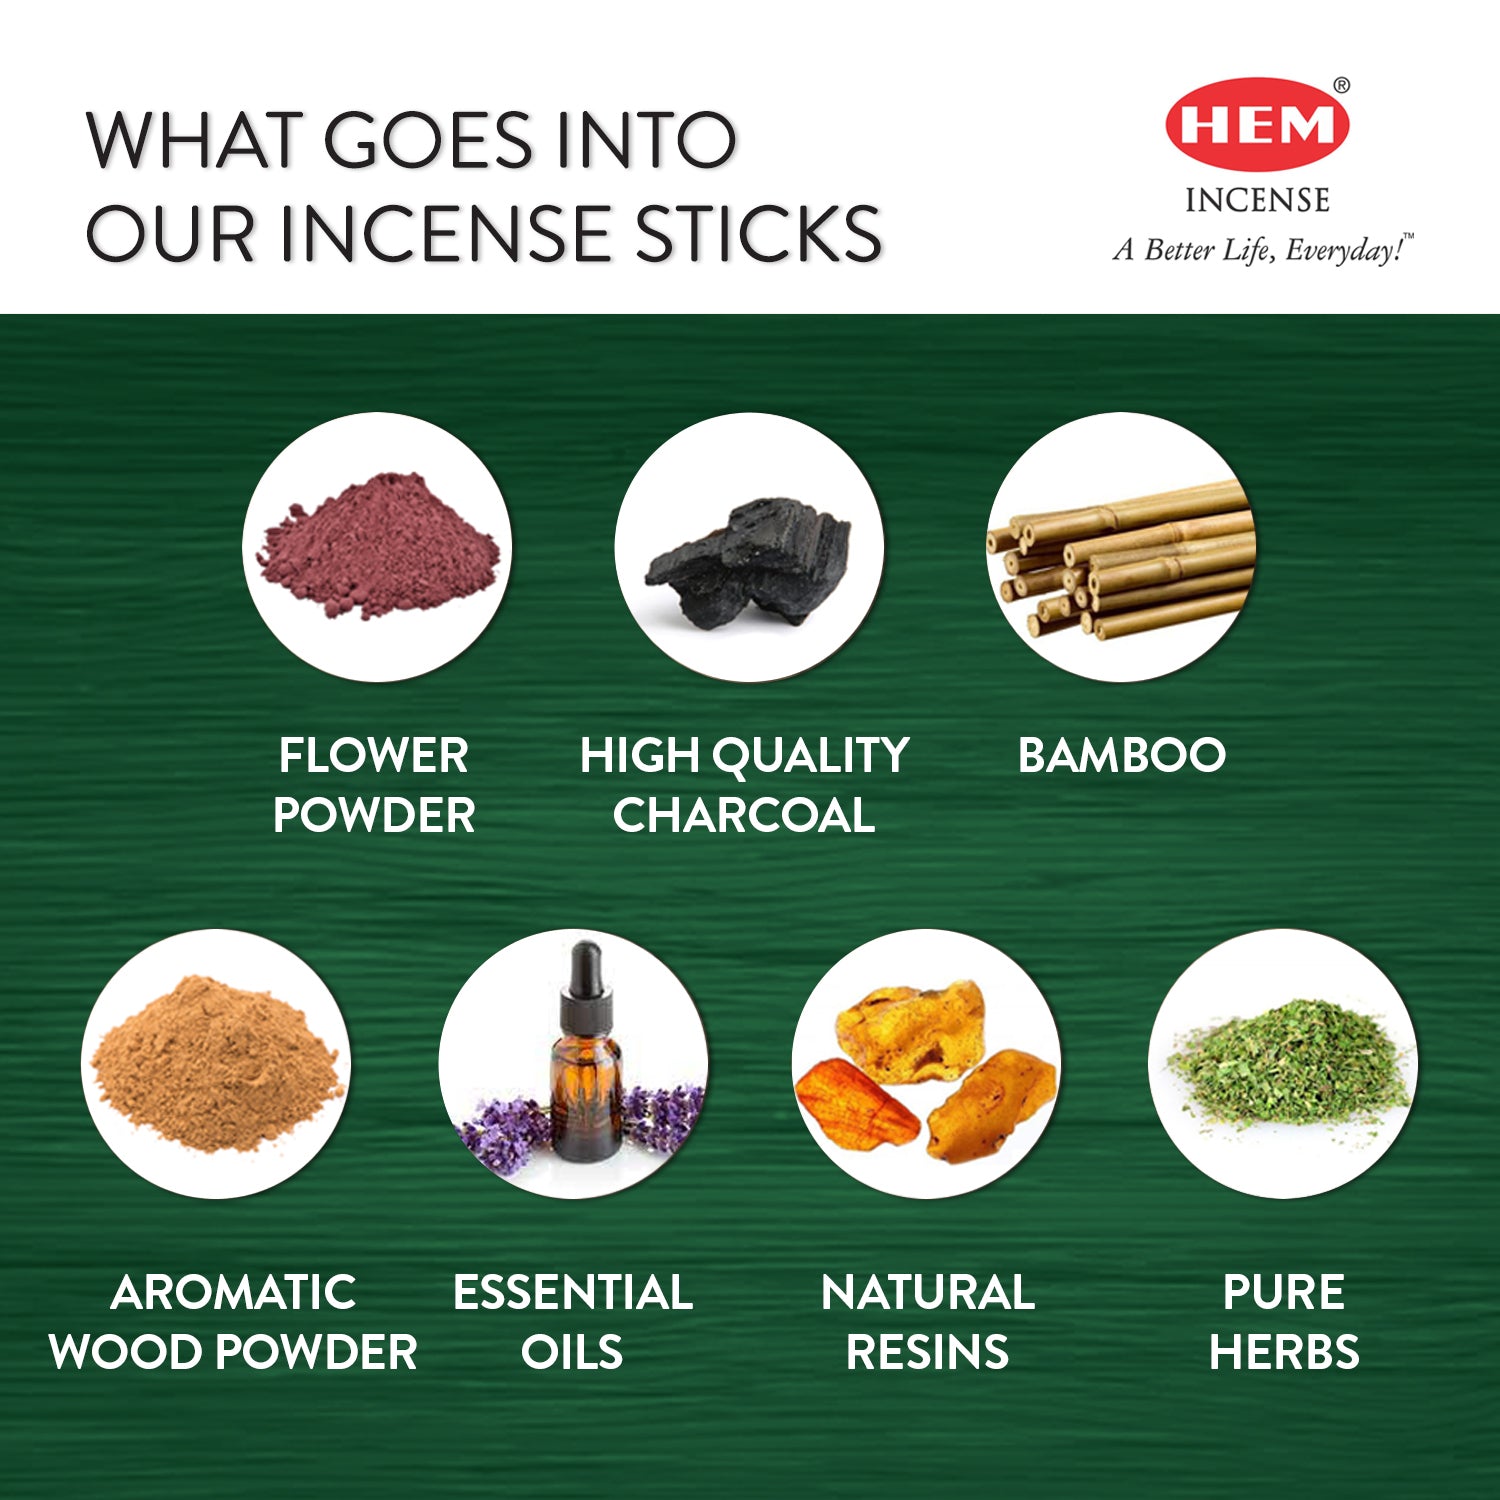 hem-precious-musk-incense-sticks-ingredients